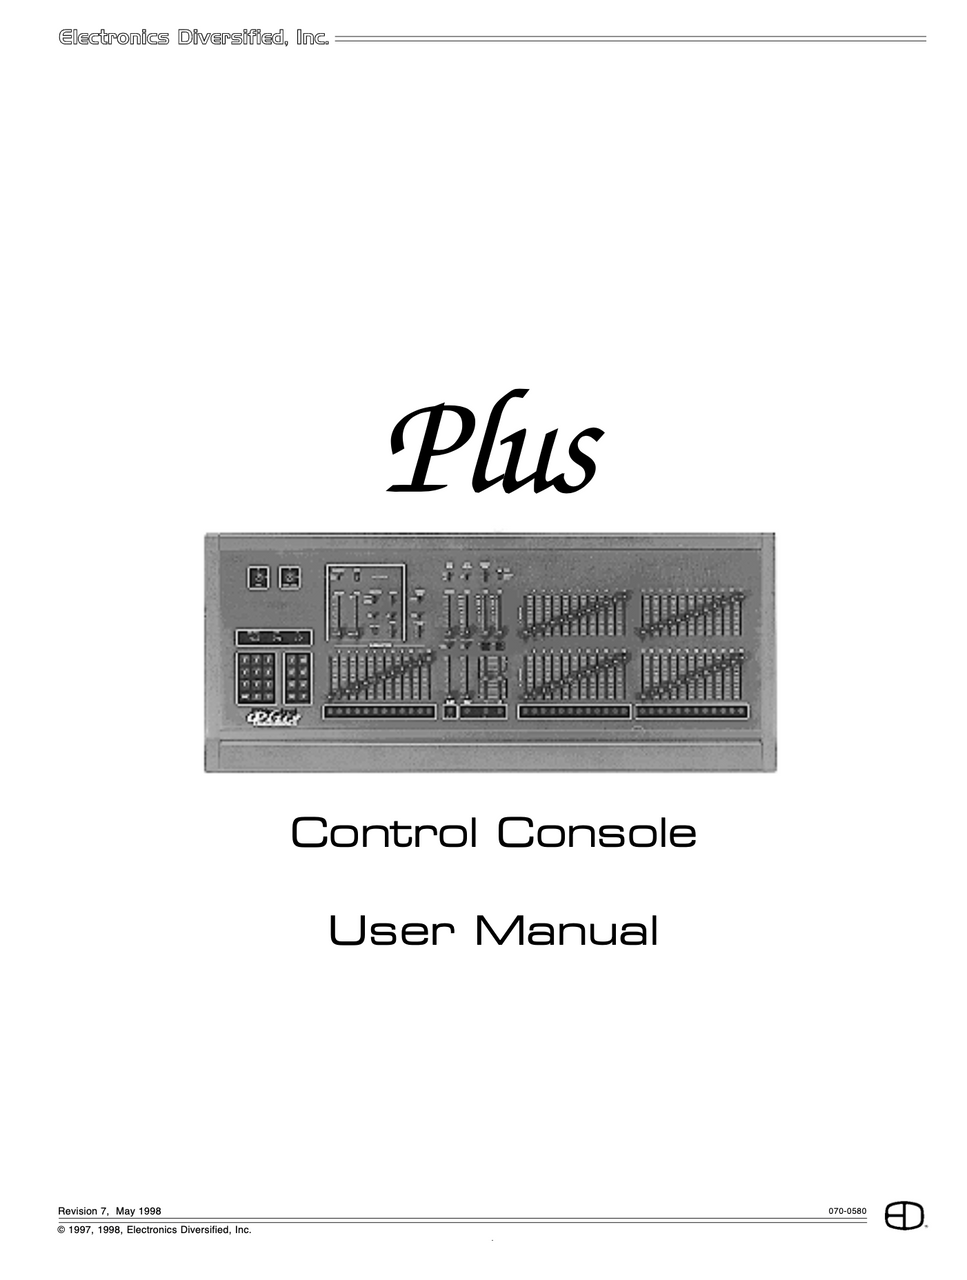 EDI Plus Console User Manual